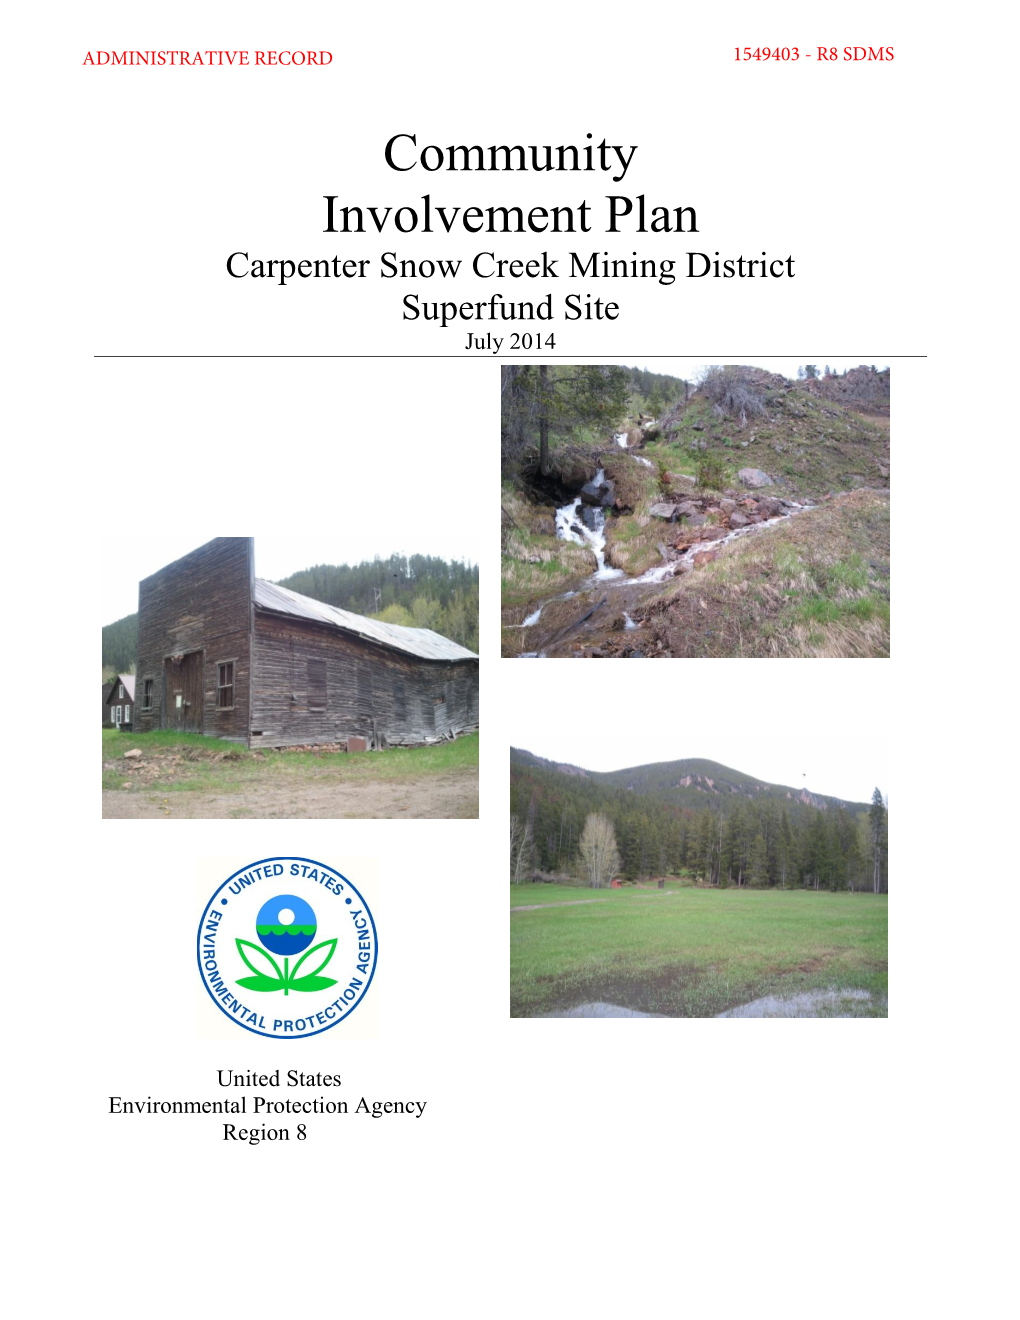 Community Involvement Plan Carpenter Snow Creek Mining District Superfund Site July 2014